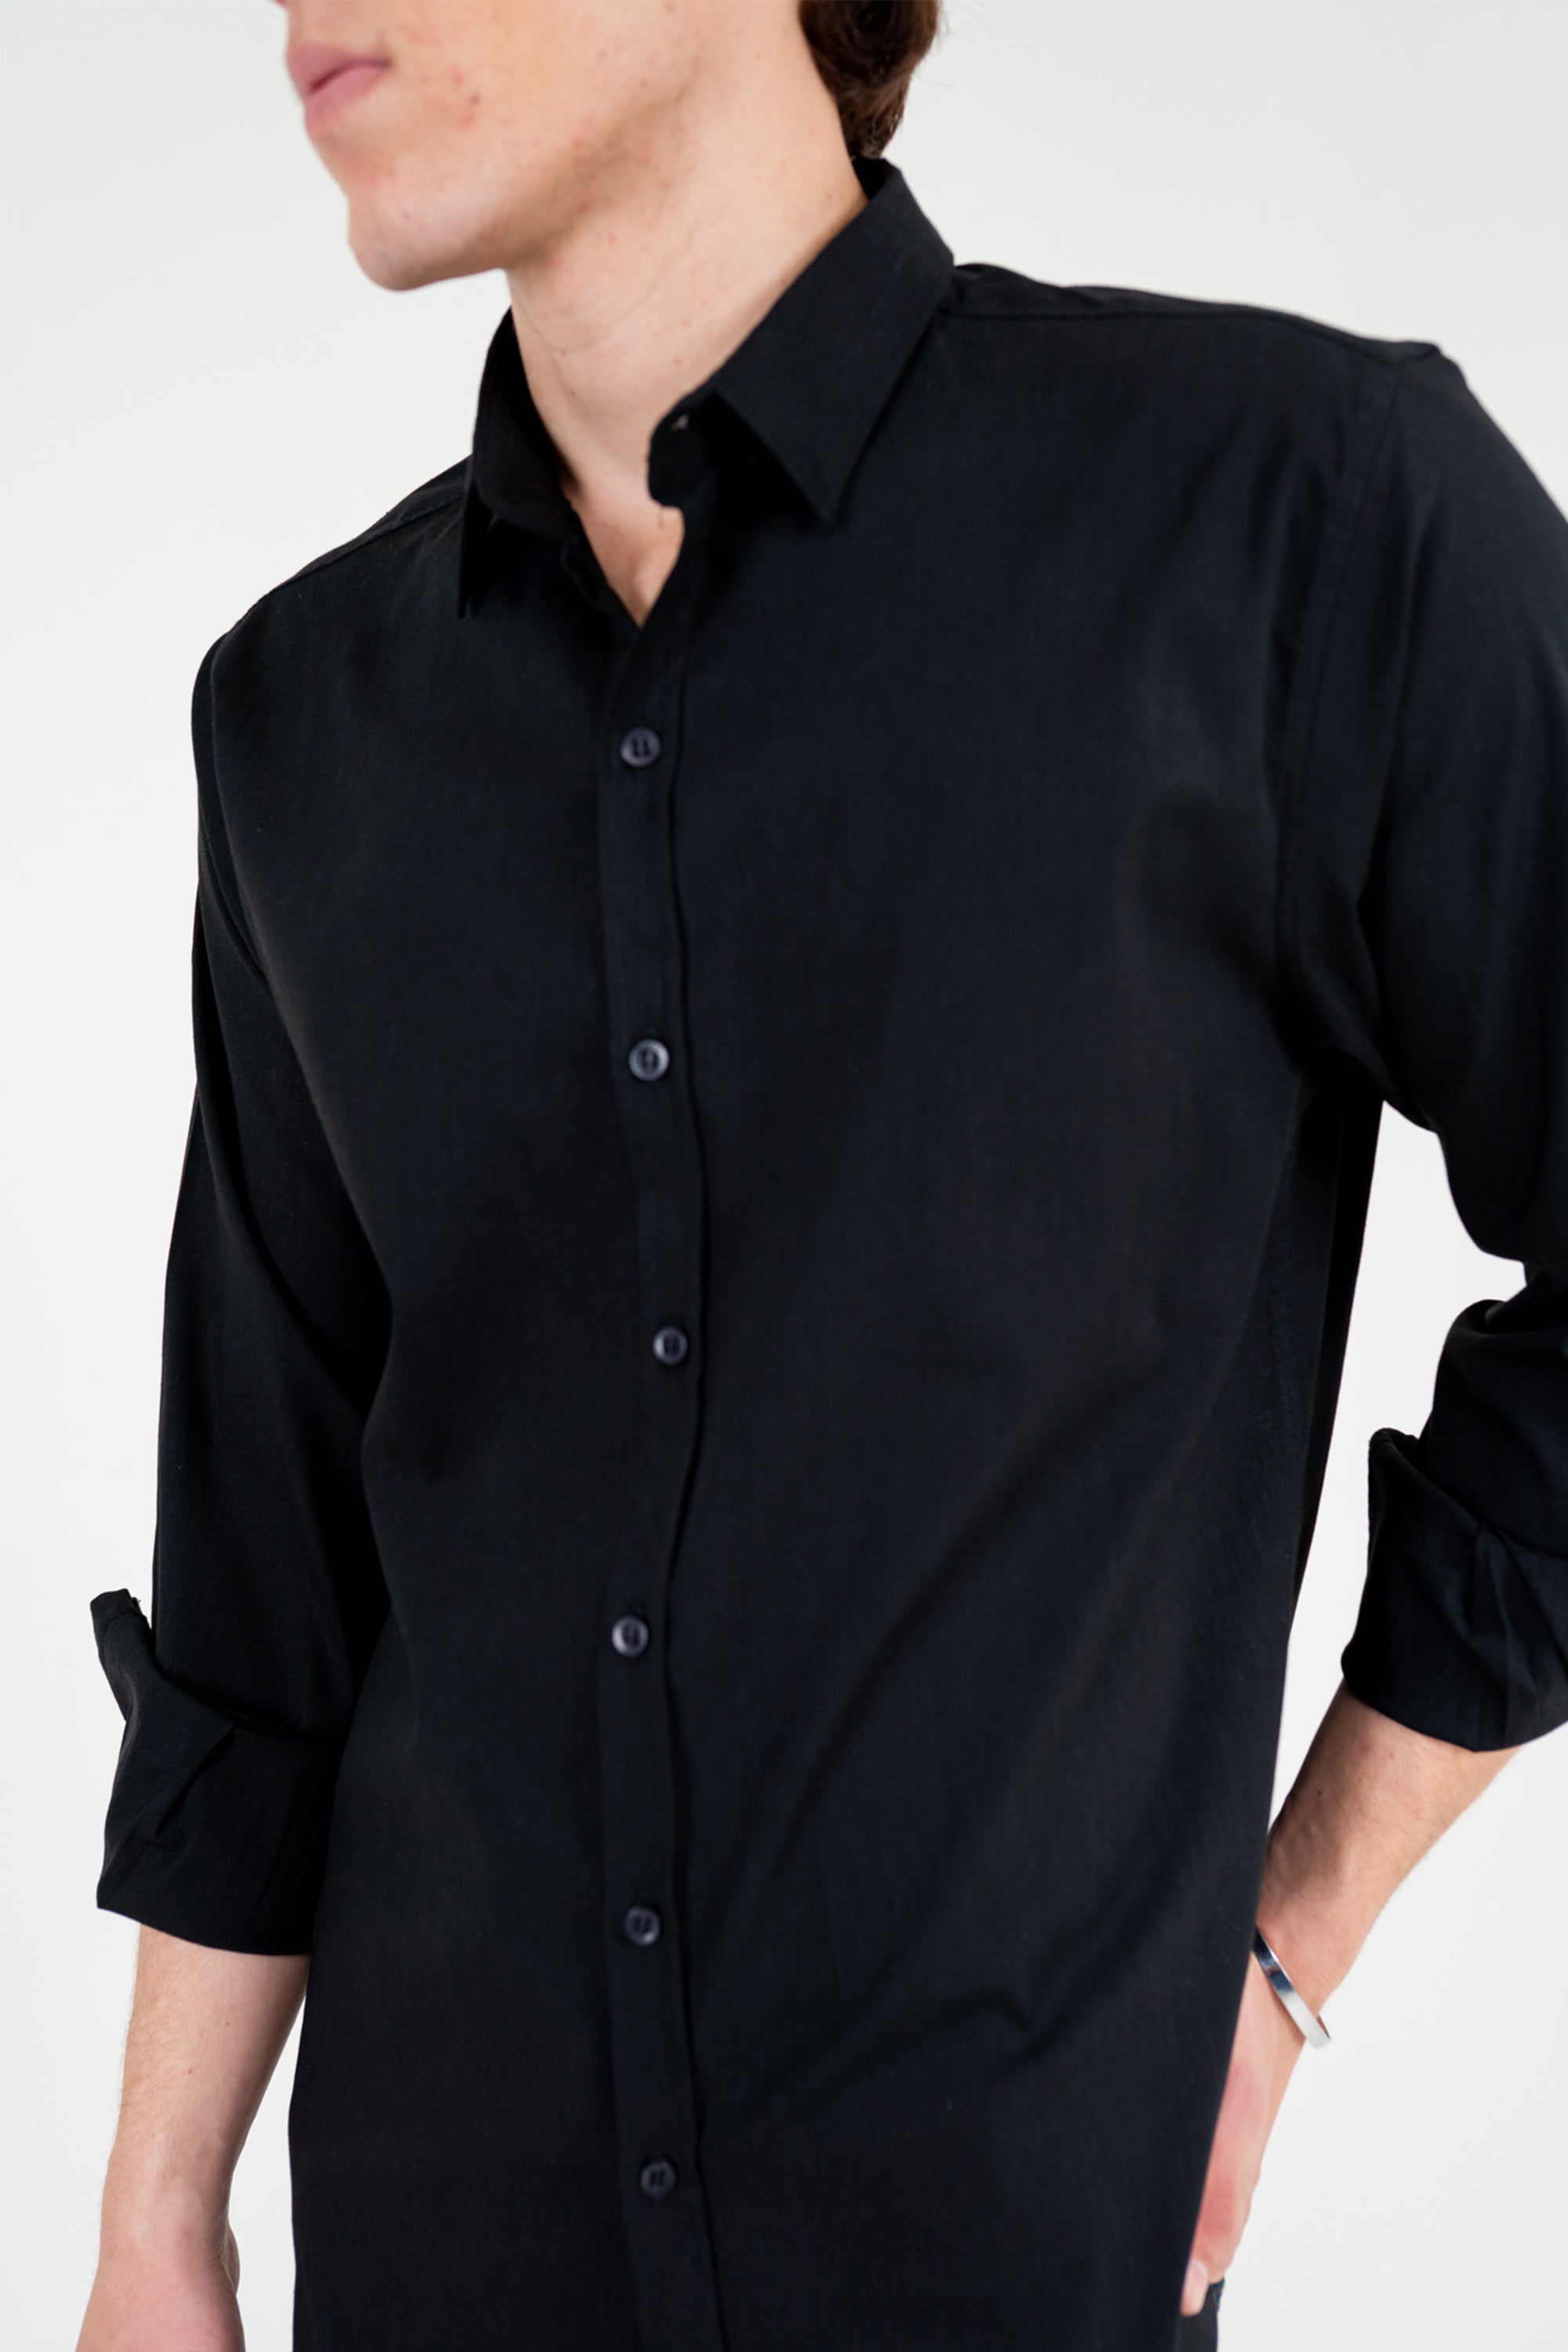 Quo Black Shirt